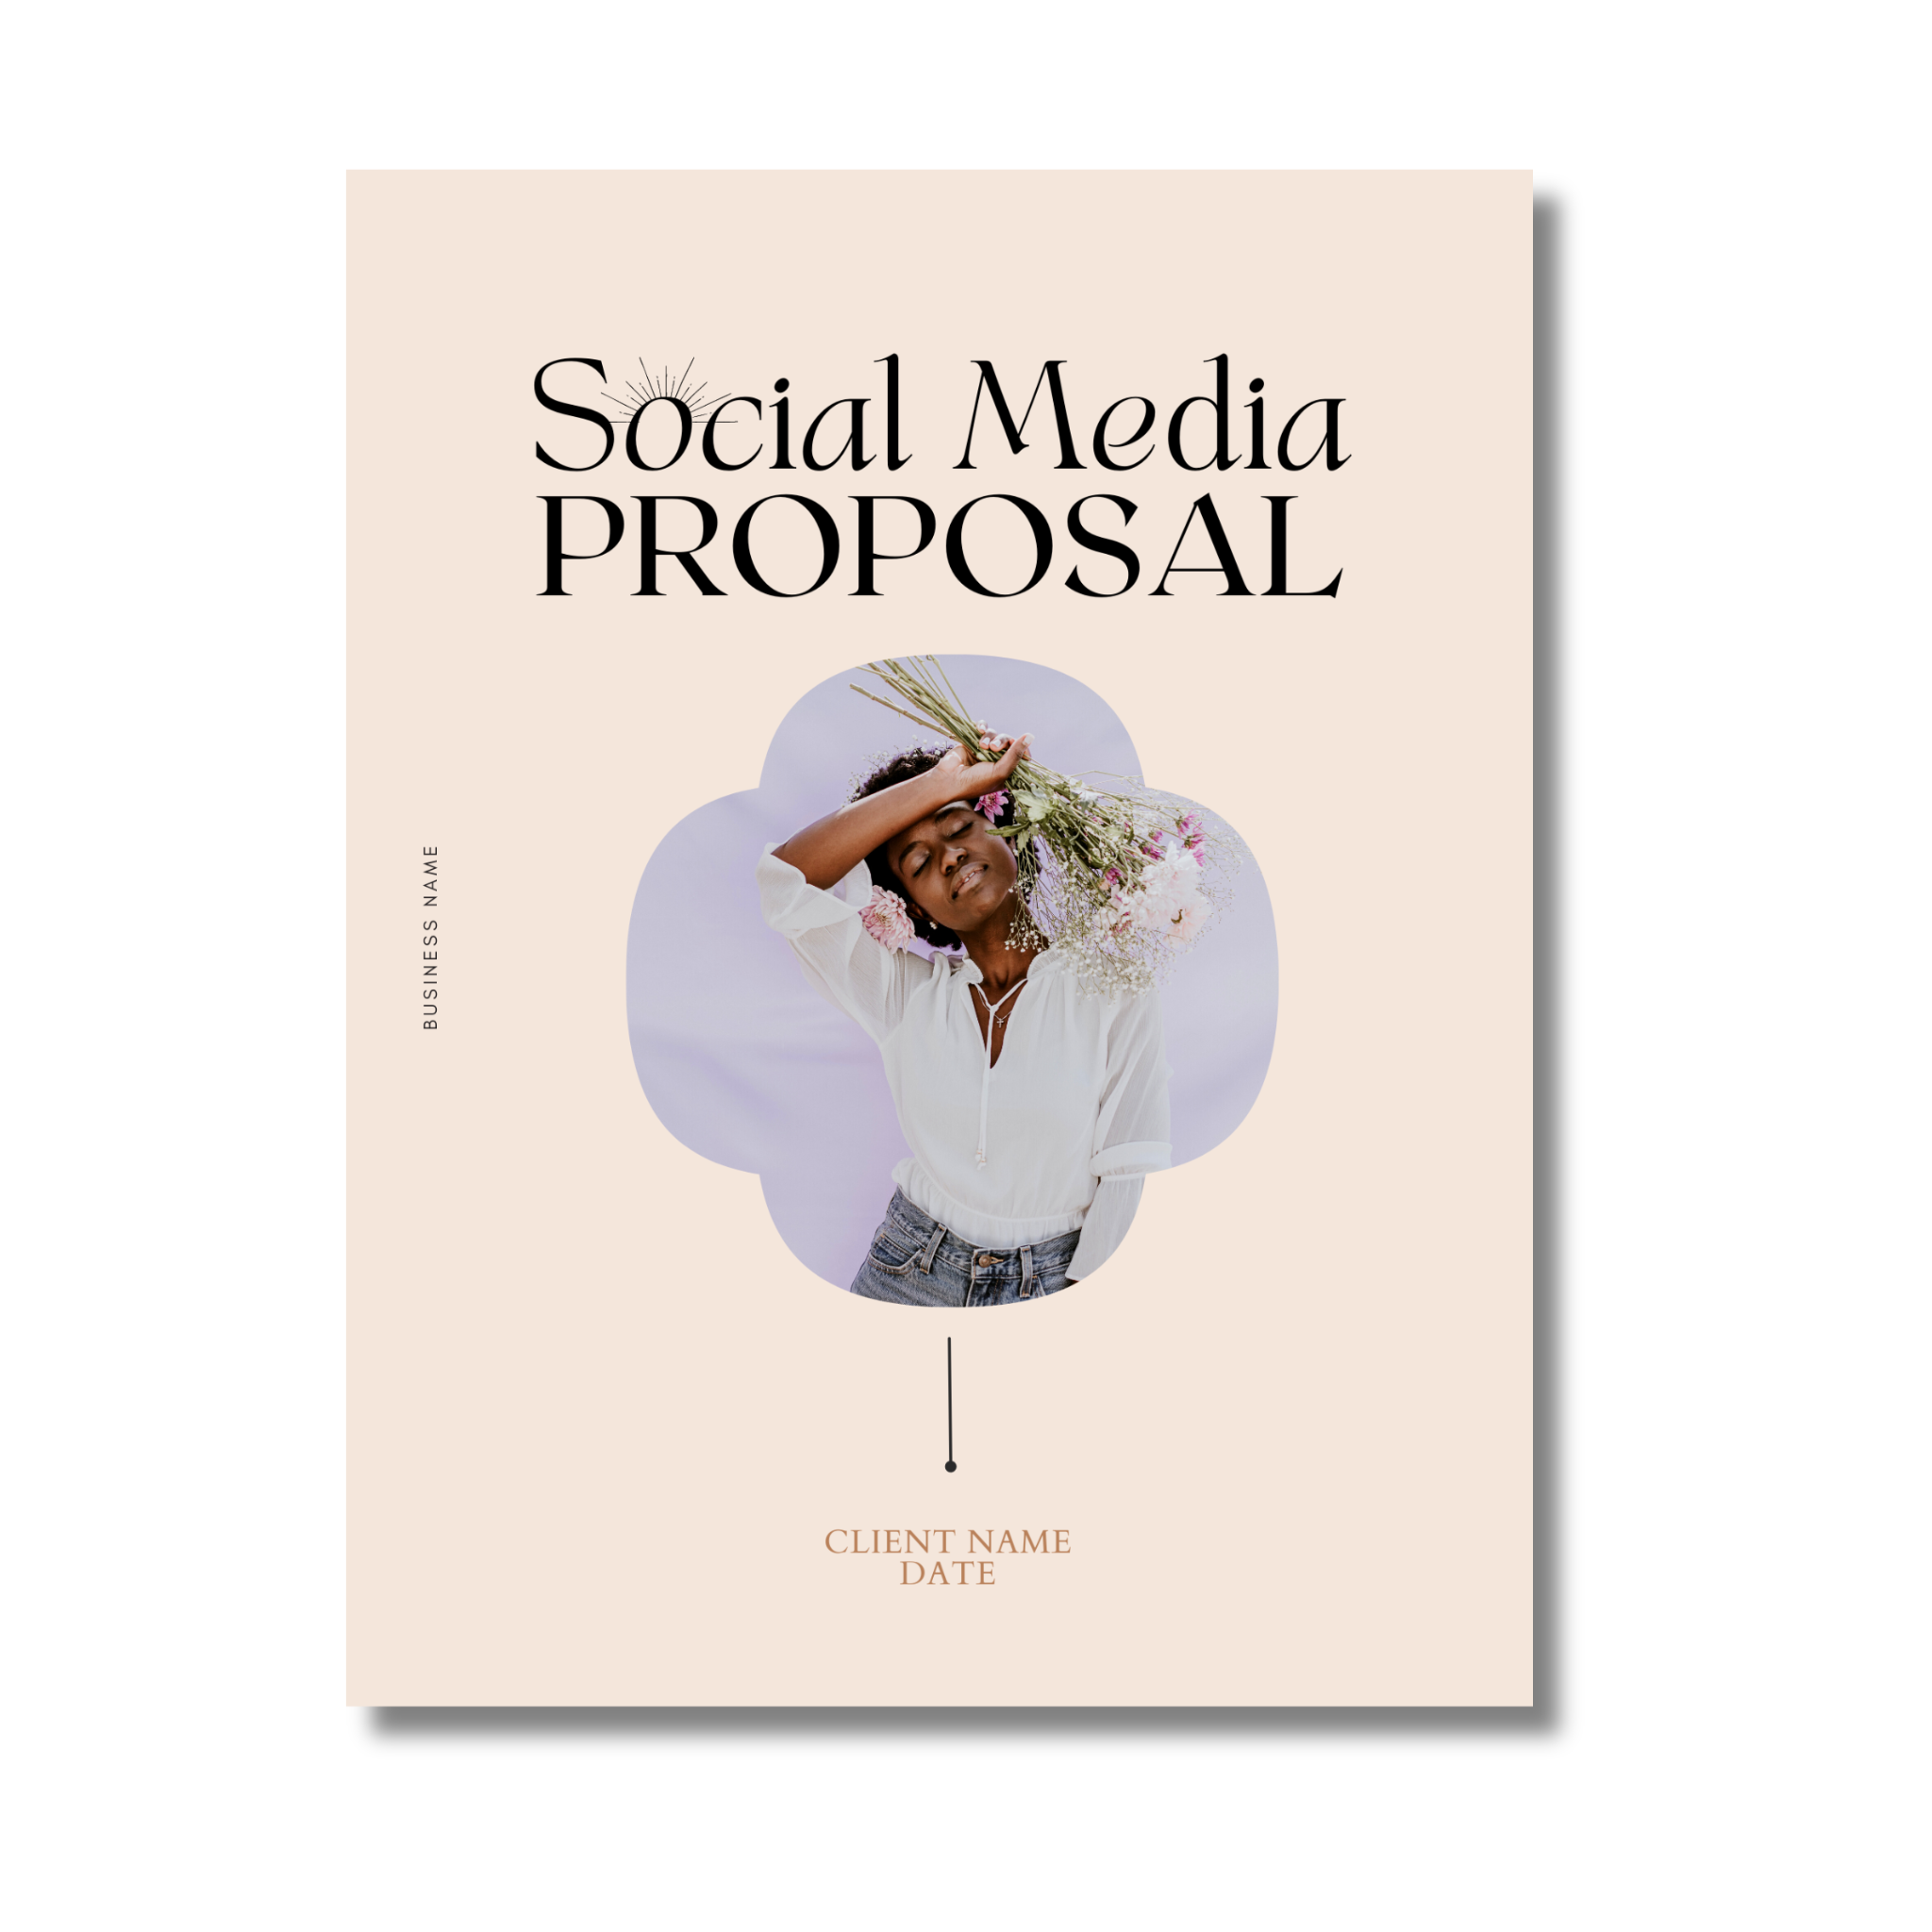 Social Media Proposal Template - Delicate & Dreamy